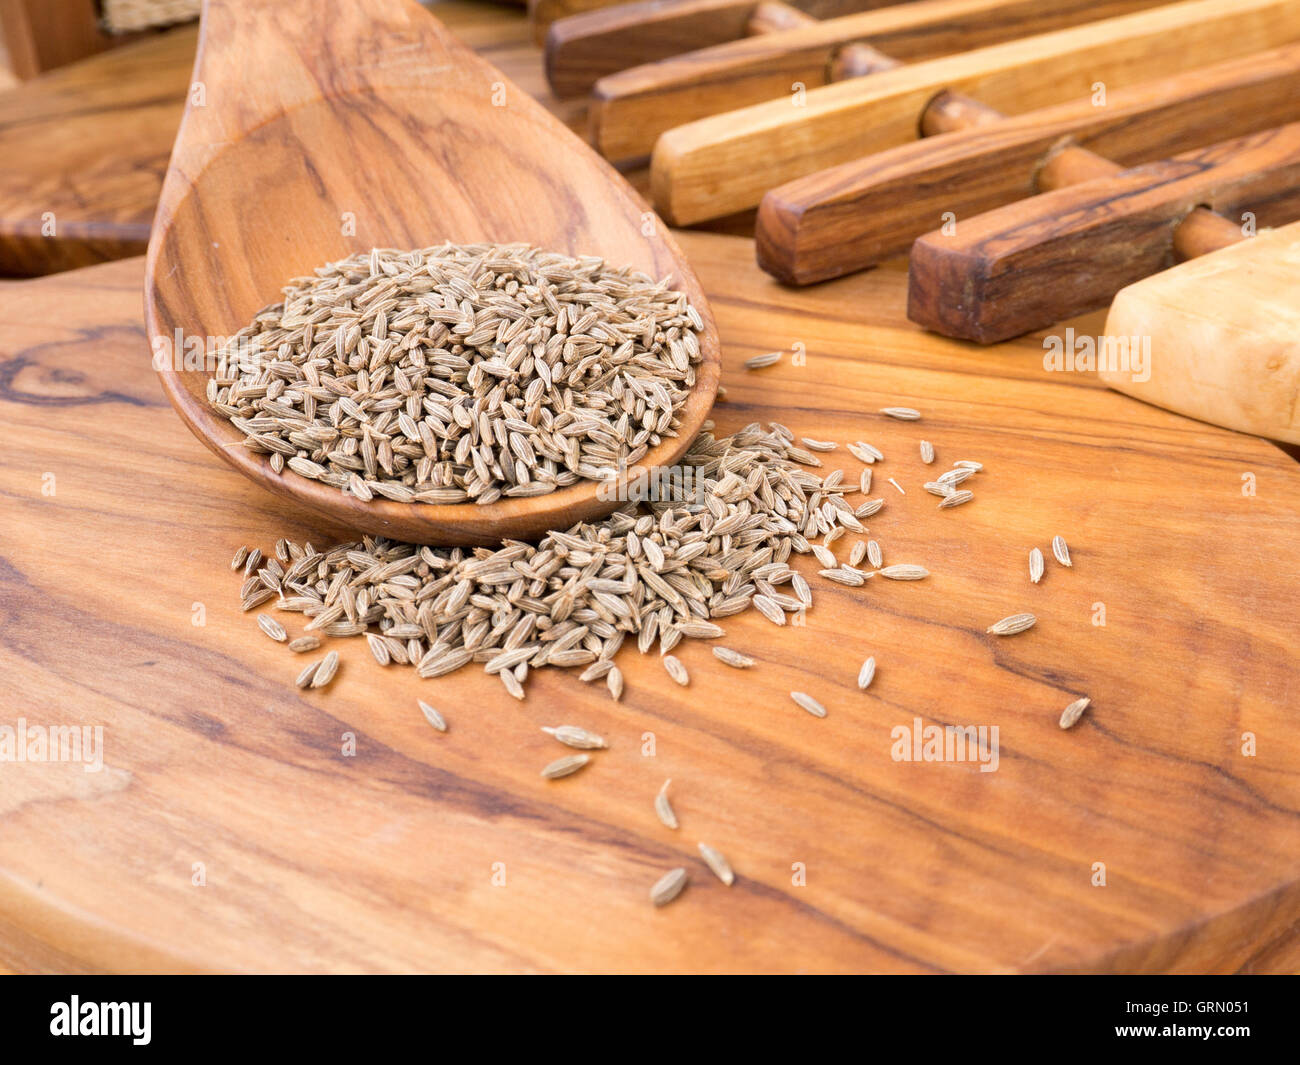 Kümmel in der Holzlöffel auf dem Oliven Holz Schneidebrett Stockfoto